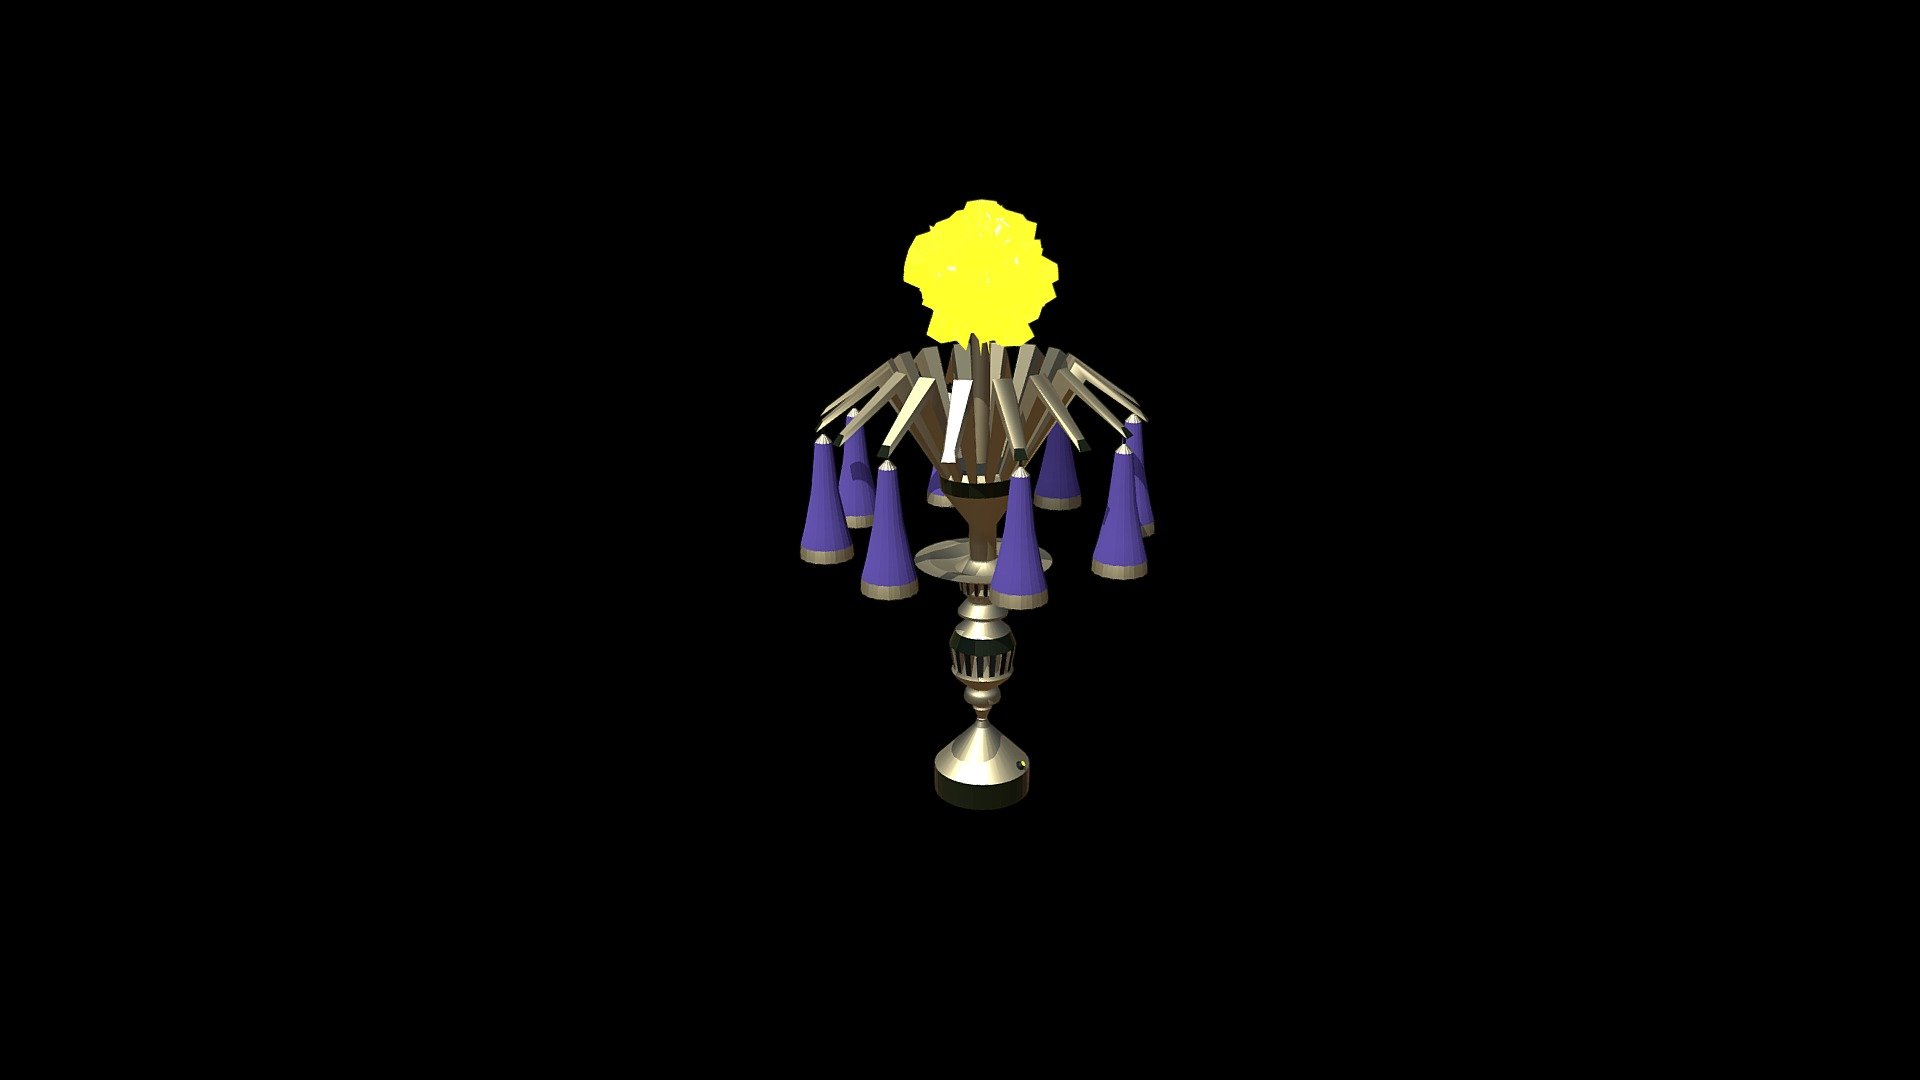 Magic Lamp - "Fire Flower"